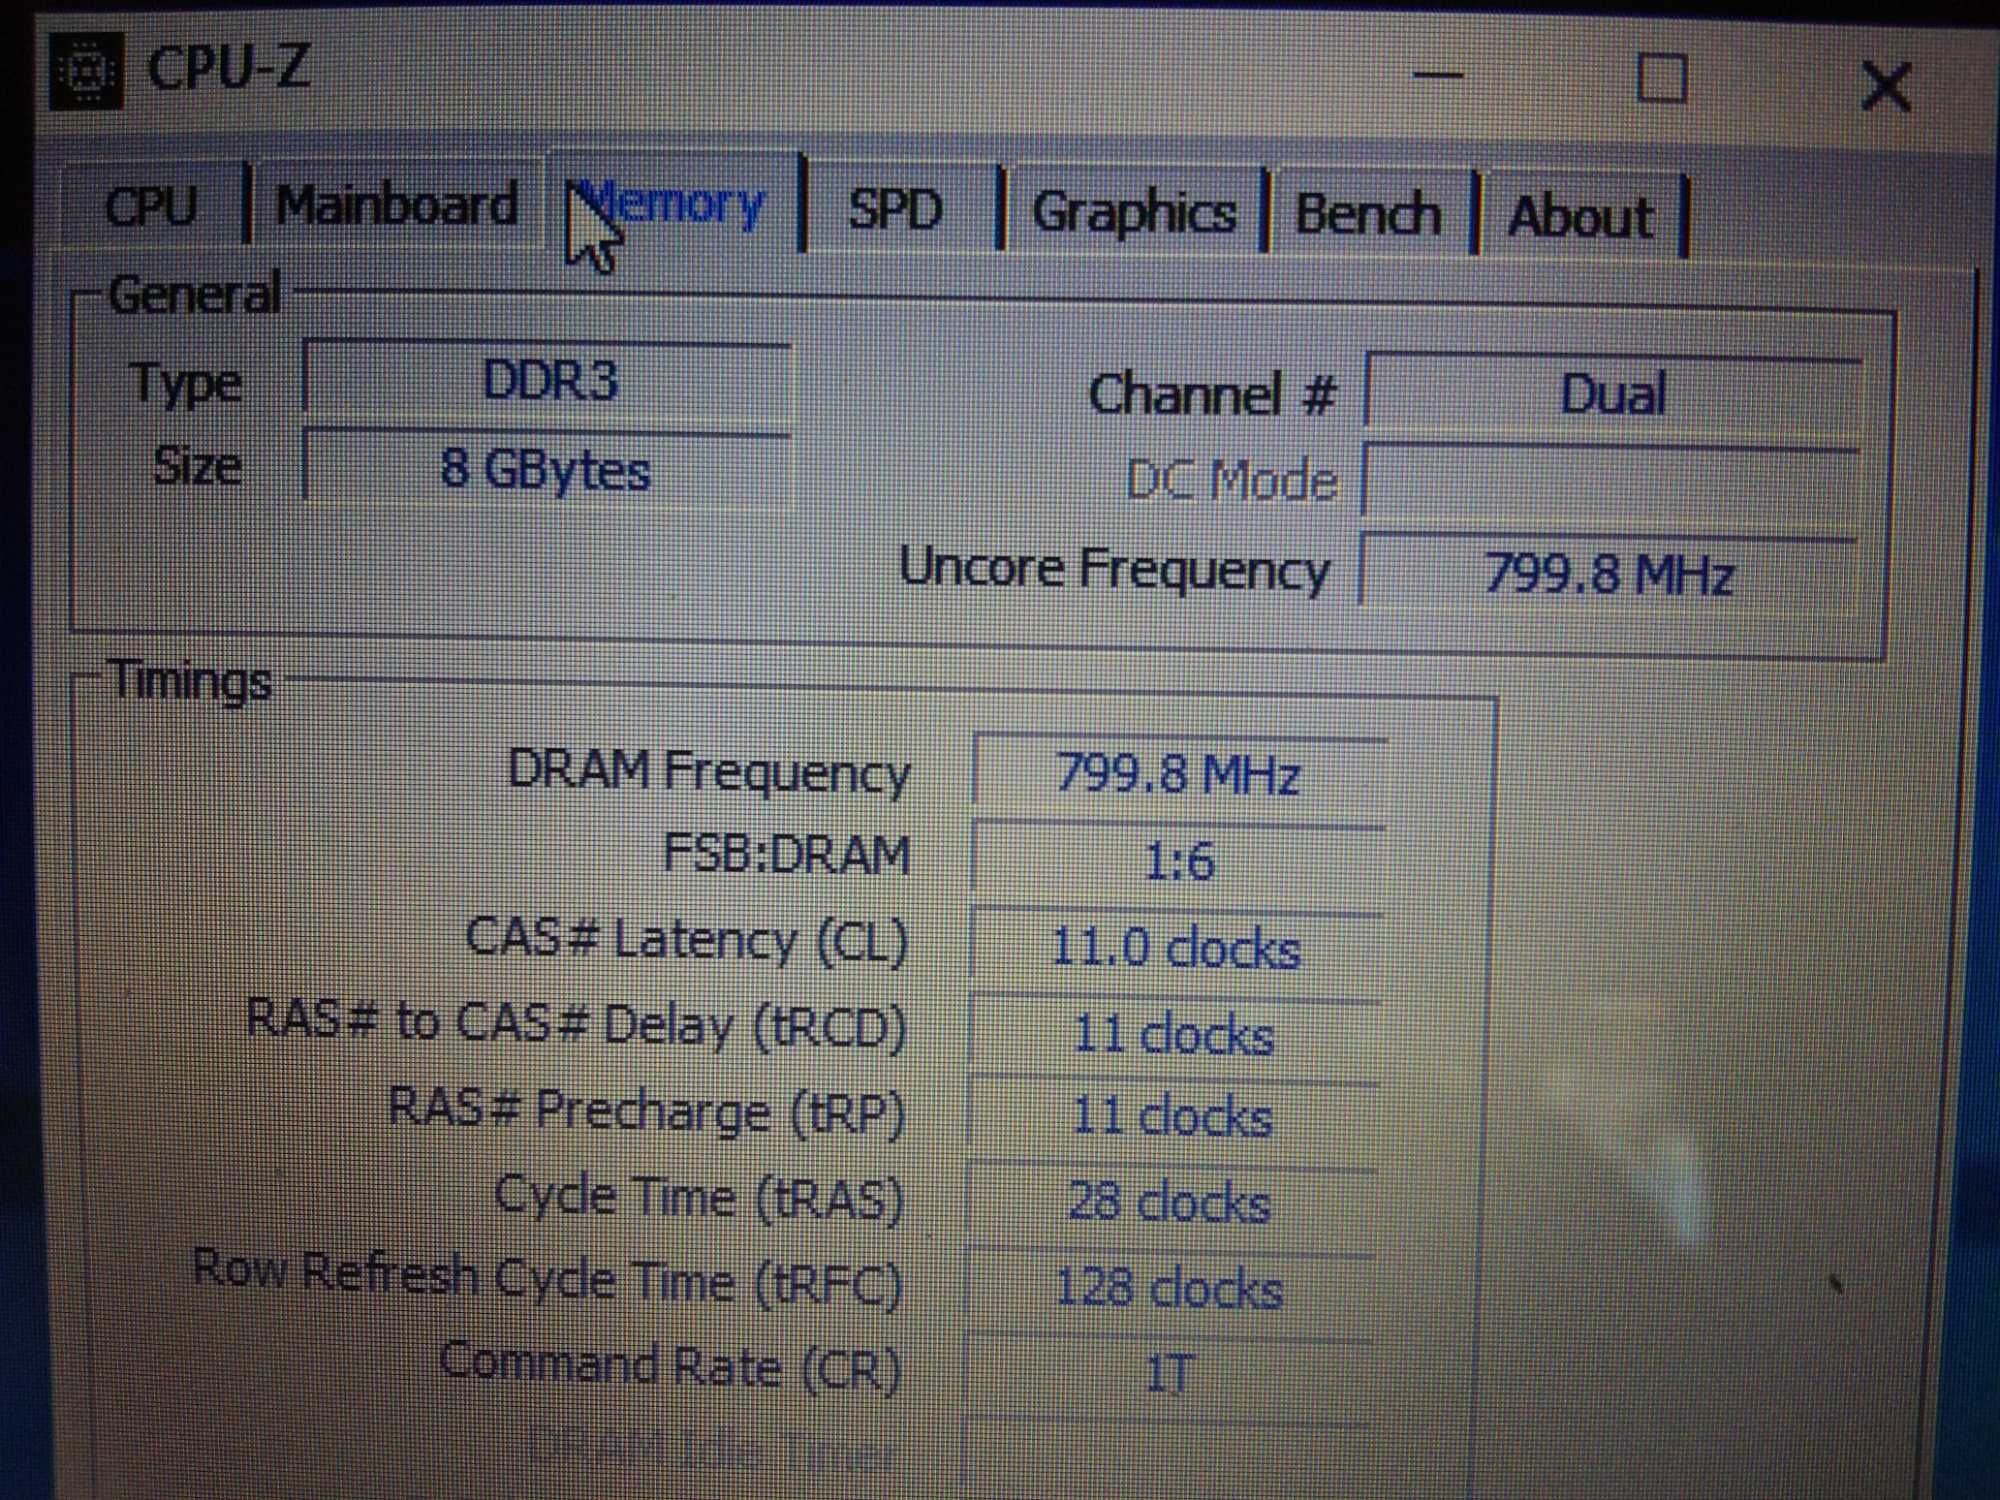 17.3 ACER Aspire E17 Intel Pentium 3556 1.7ghz ram8gb хард 500gb